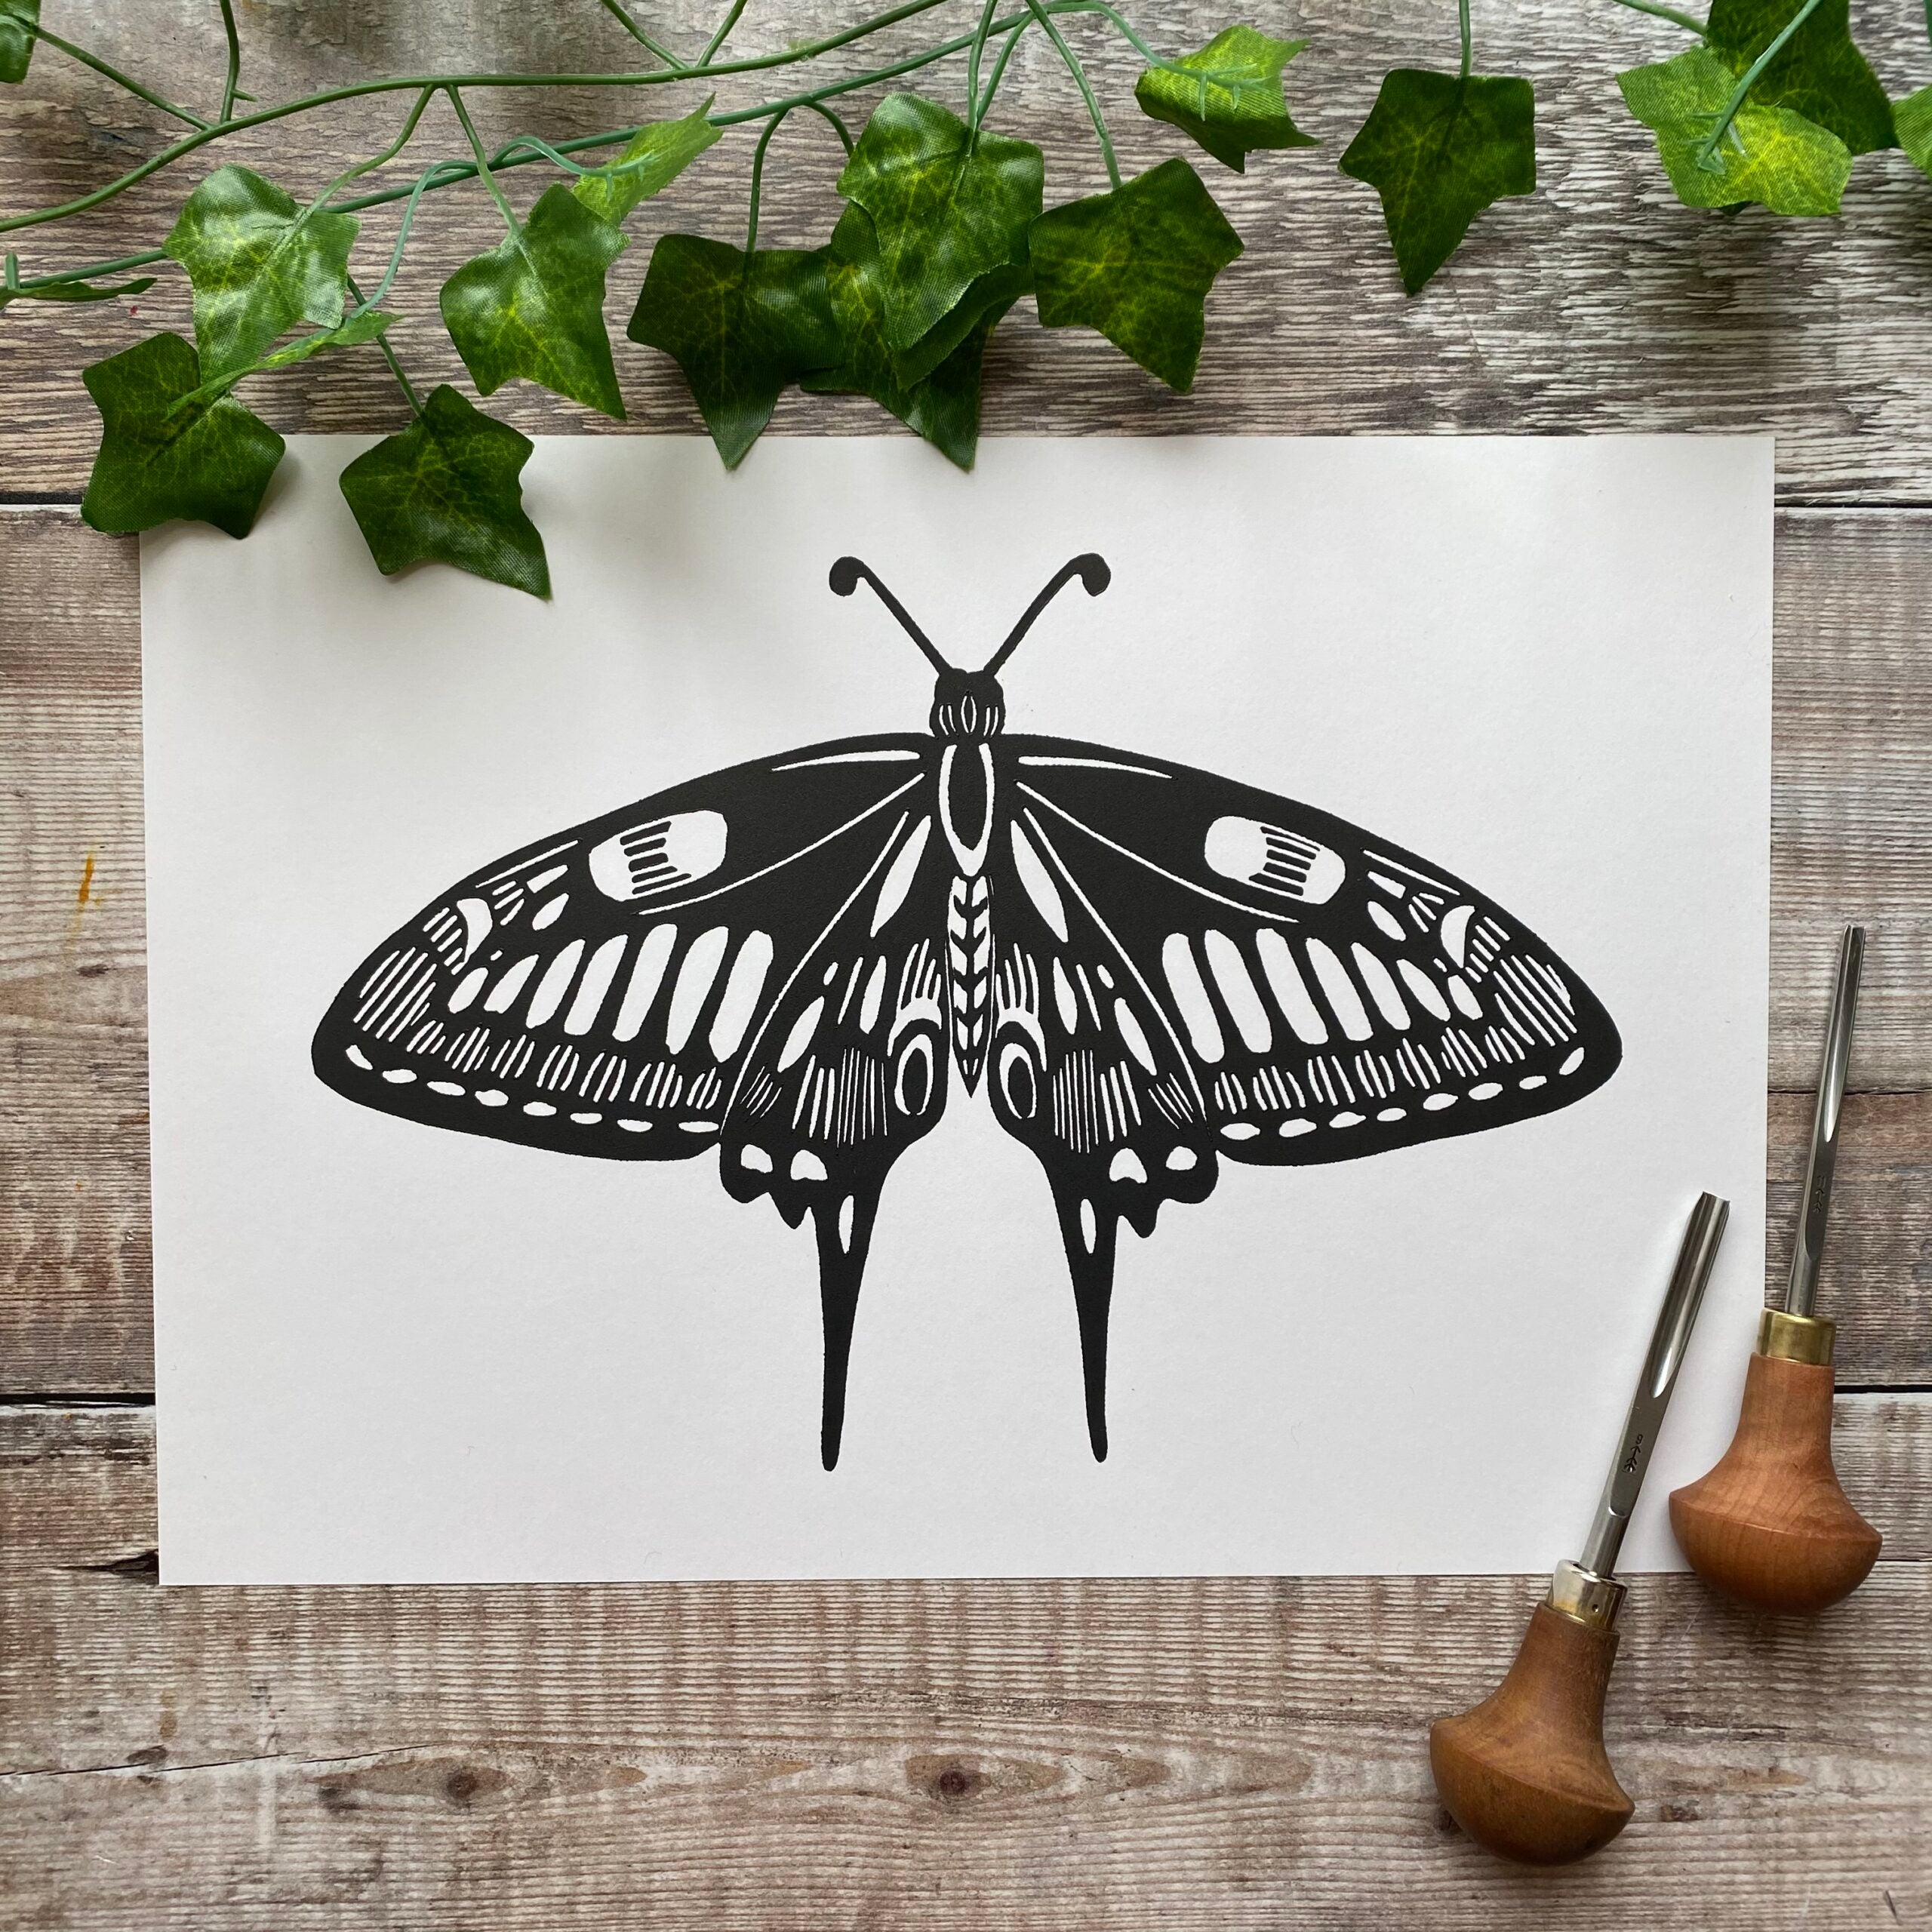 SALE - Swallowtail Butterfly - Original Linocut Print